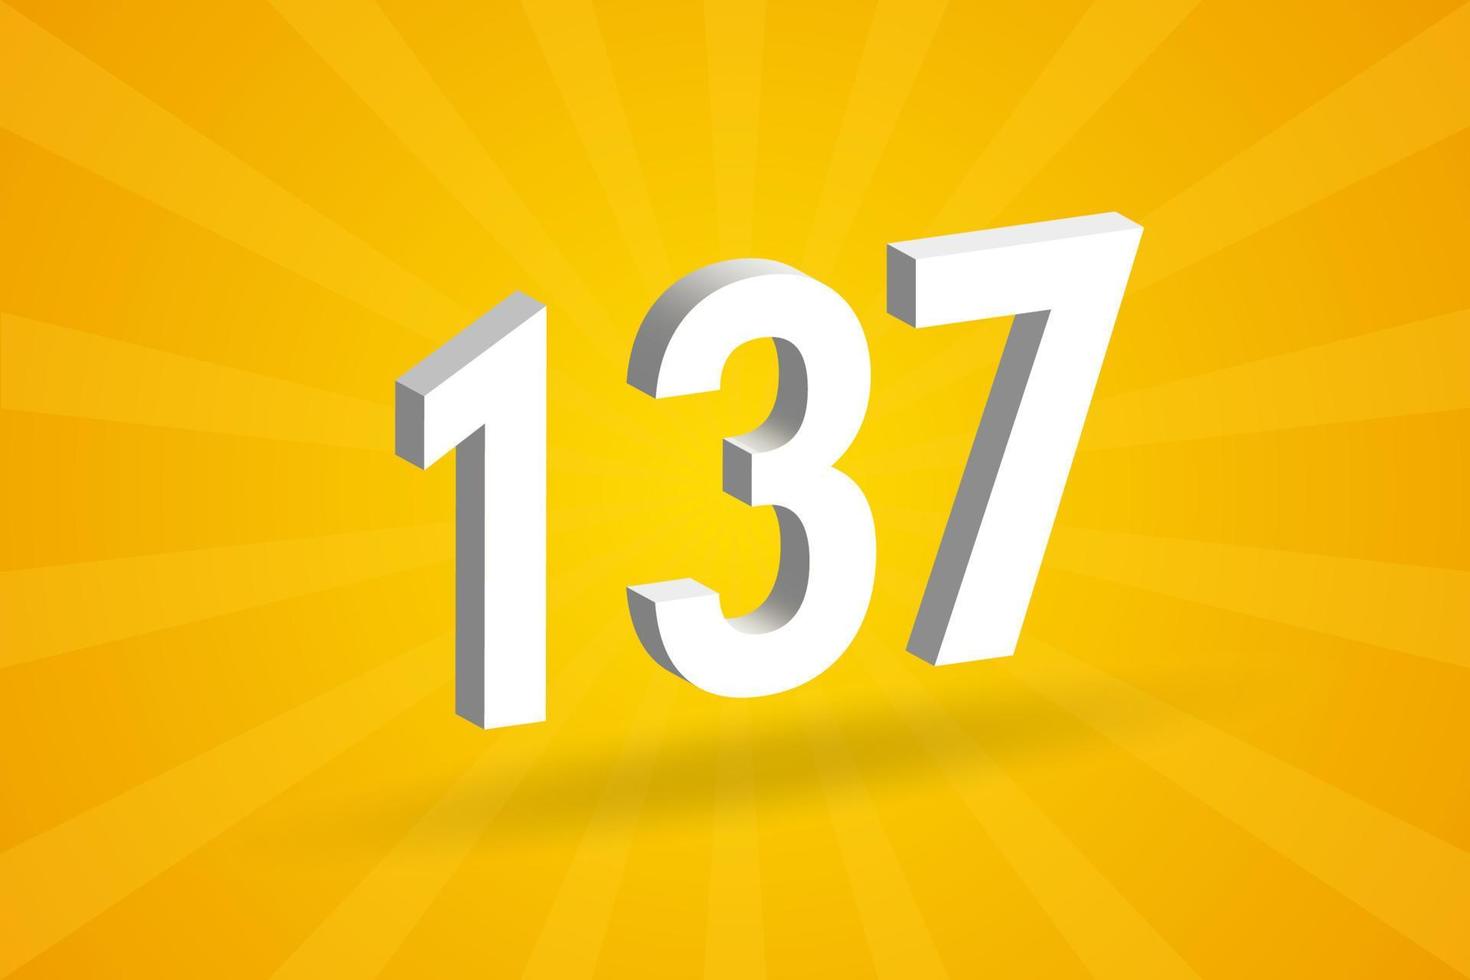 3d 137 siffra font alfabet. vit 3d siffra 137 med gul bakgrund vektor